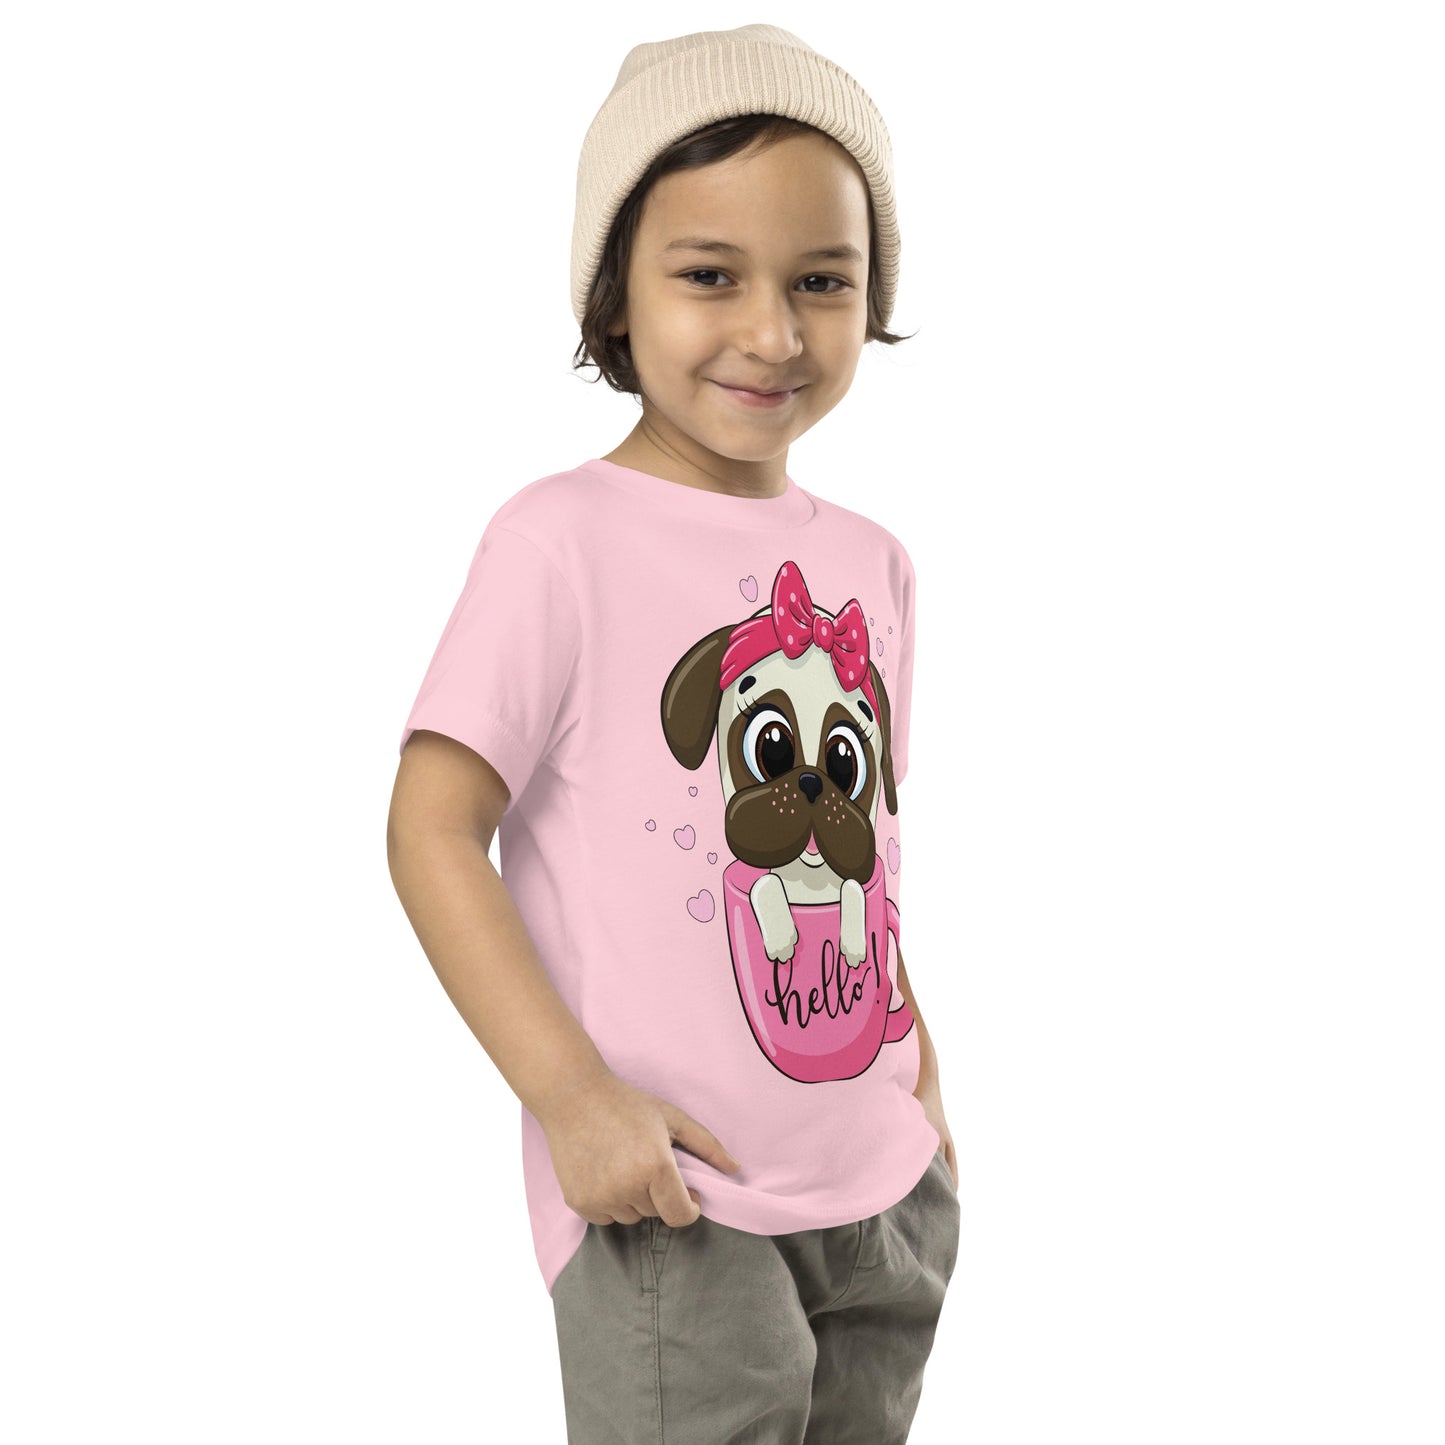 Cute Puppy Dog T-shirt, No. 0375